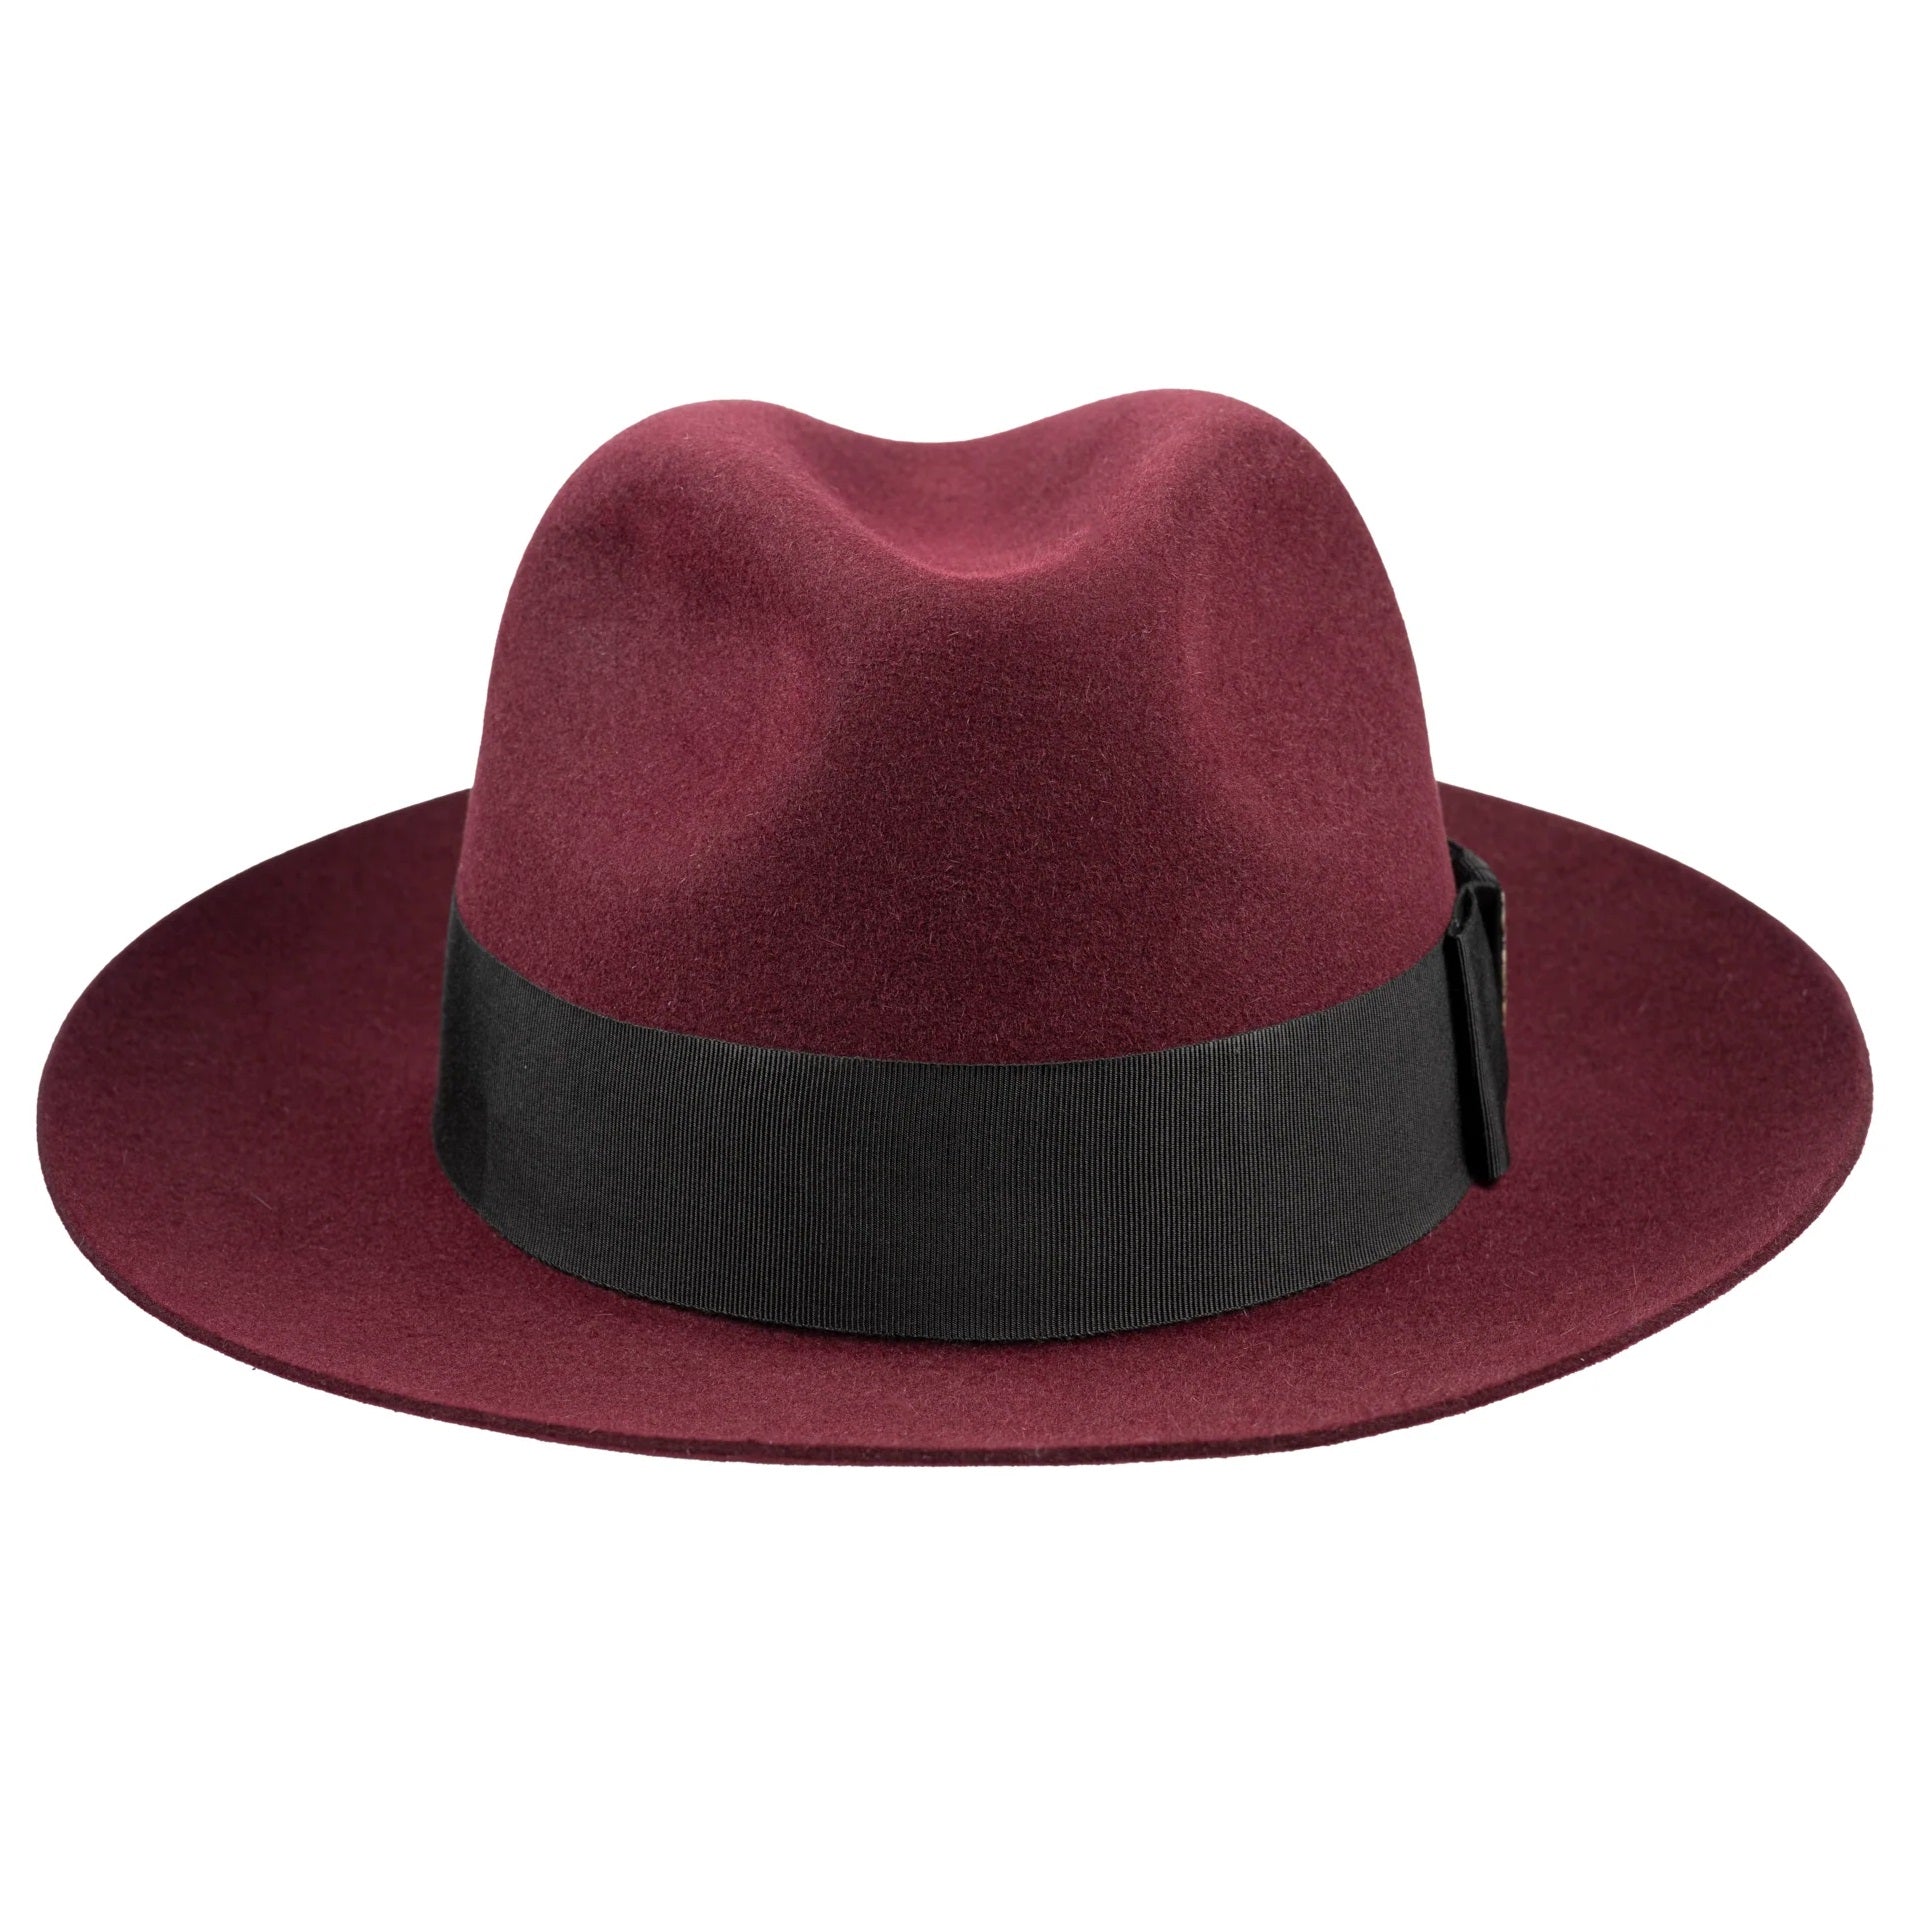 CHRISTYS' Classic Fur Felt Fedora Hat - Red Wine